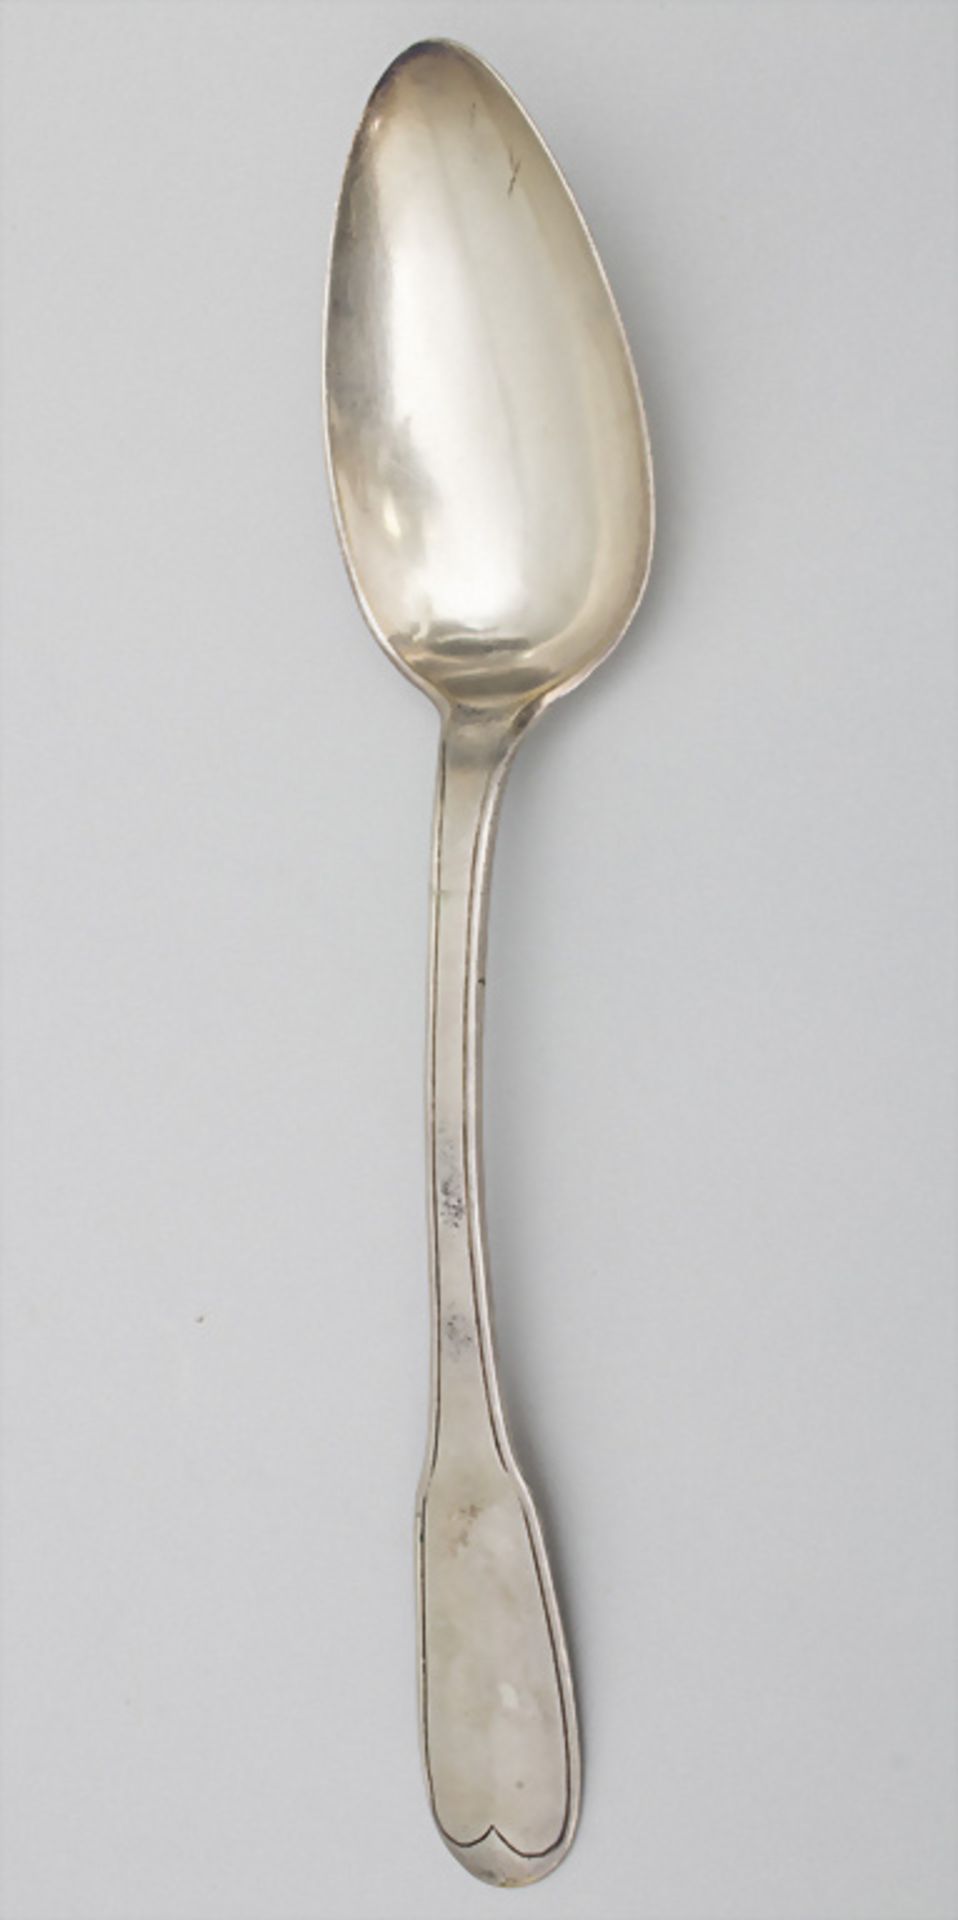 6 Löffel / 6 silver spoons, Johann Heinrich Philipp Schott, Frankfurt, 1805 - Image 3 of 8